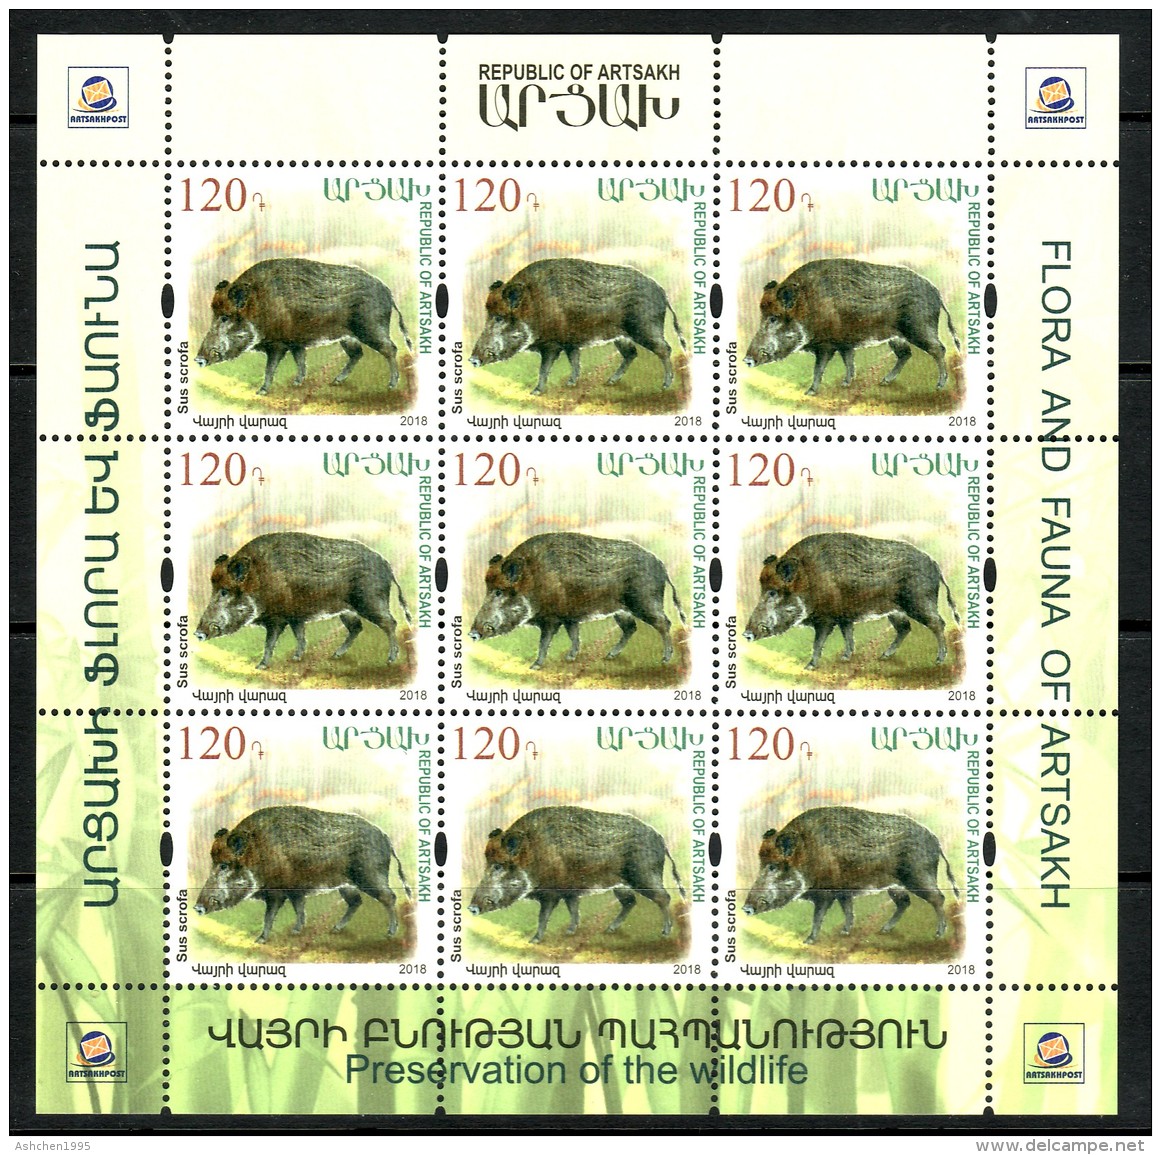 Armenien/Armenie/Armenia/Artsakh/Karabakh 2018, Flora Fauna Wildlife, Wildcat Wild Boar Squirrel, 3 Sheets - MNH - Armenia